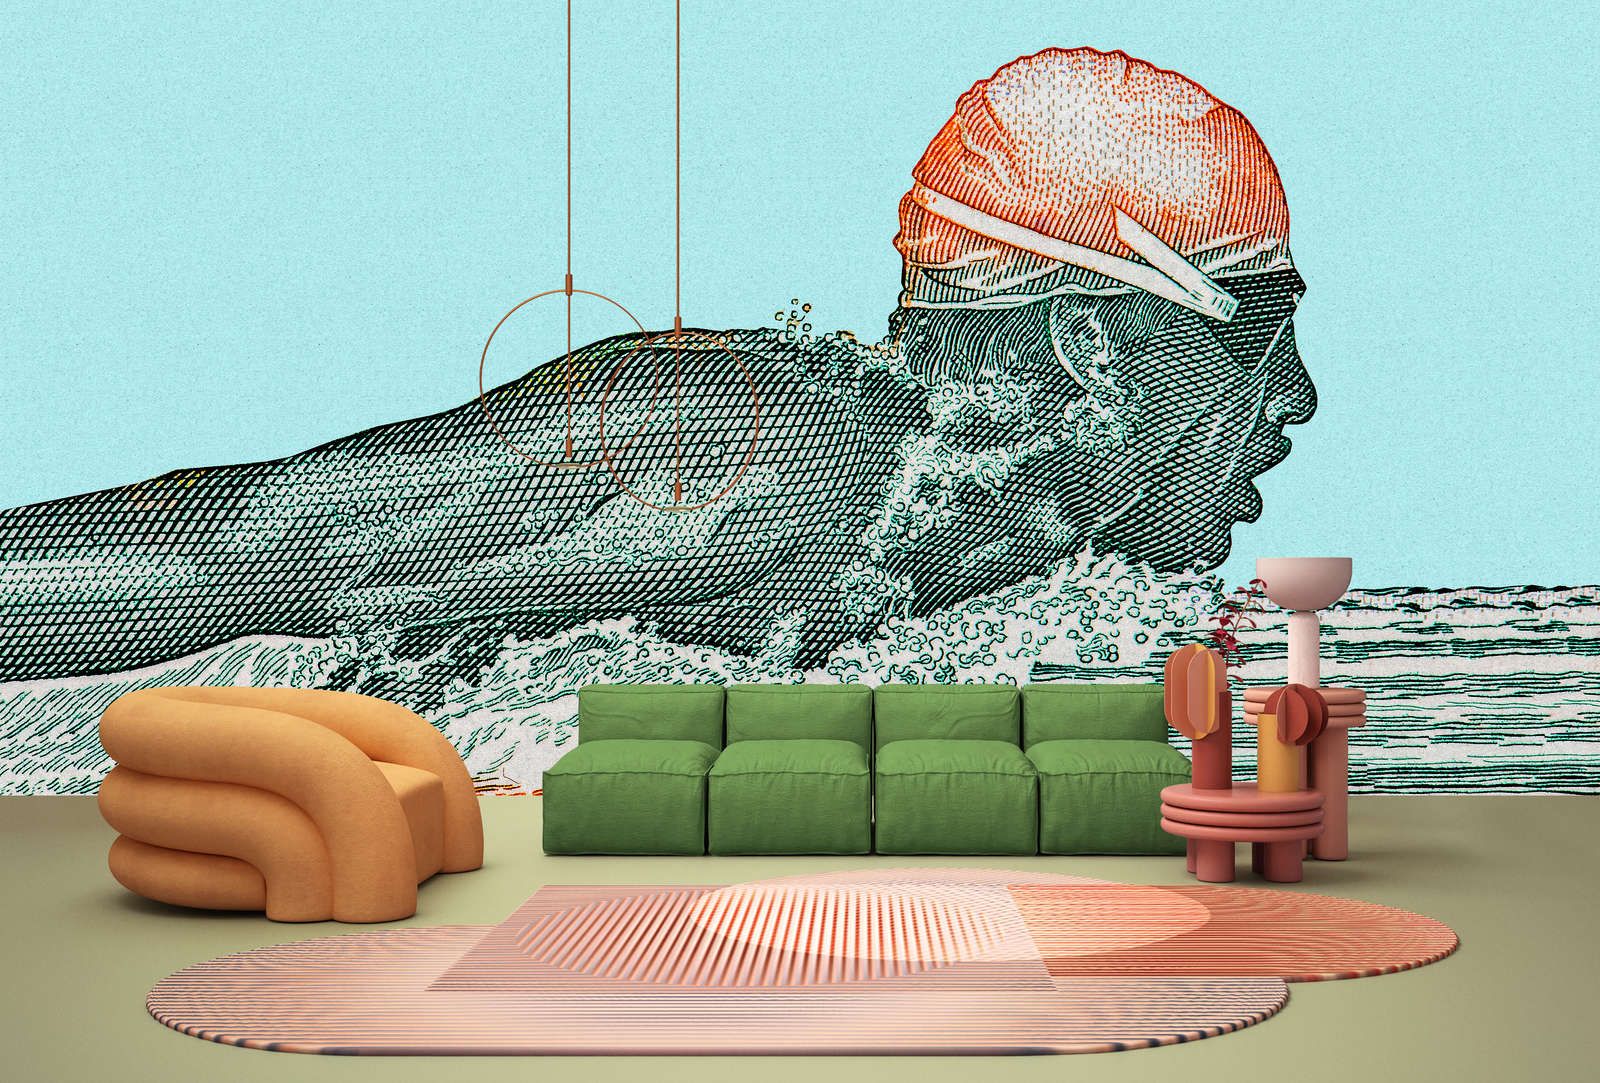             Fotomurali »aquaman« - Disegno del nuotatore in pixel - benzina con texture in carta kraft | Materiali non tessuto premium liscio e leggermente lucido
        